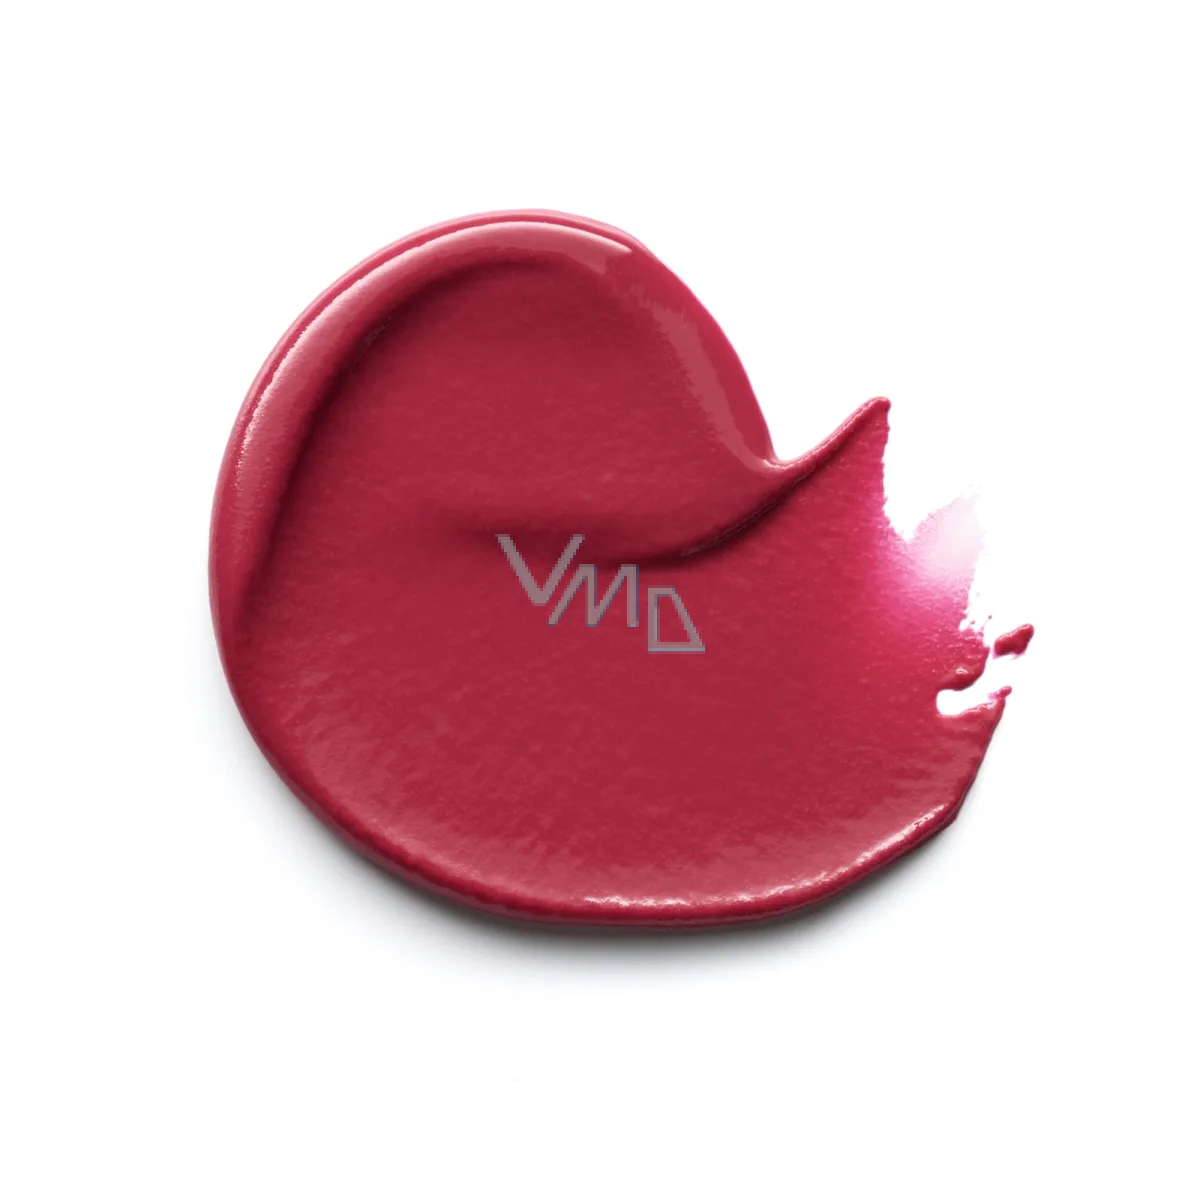 Essence Heart Core Lip Balm 02 Sweet Strawberry 3 g - VMD